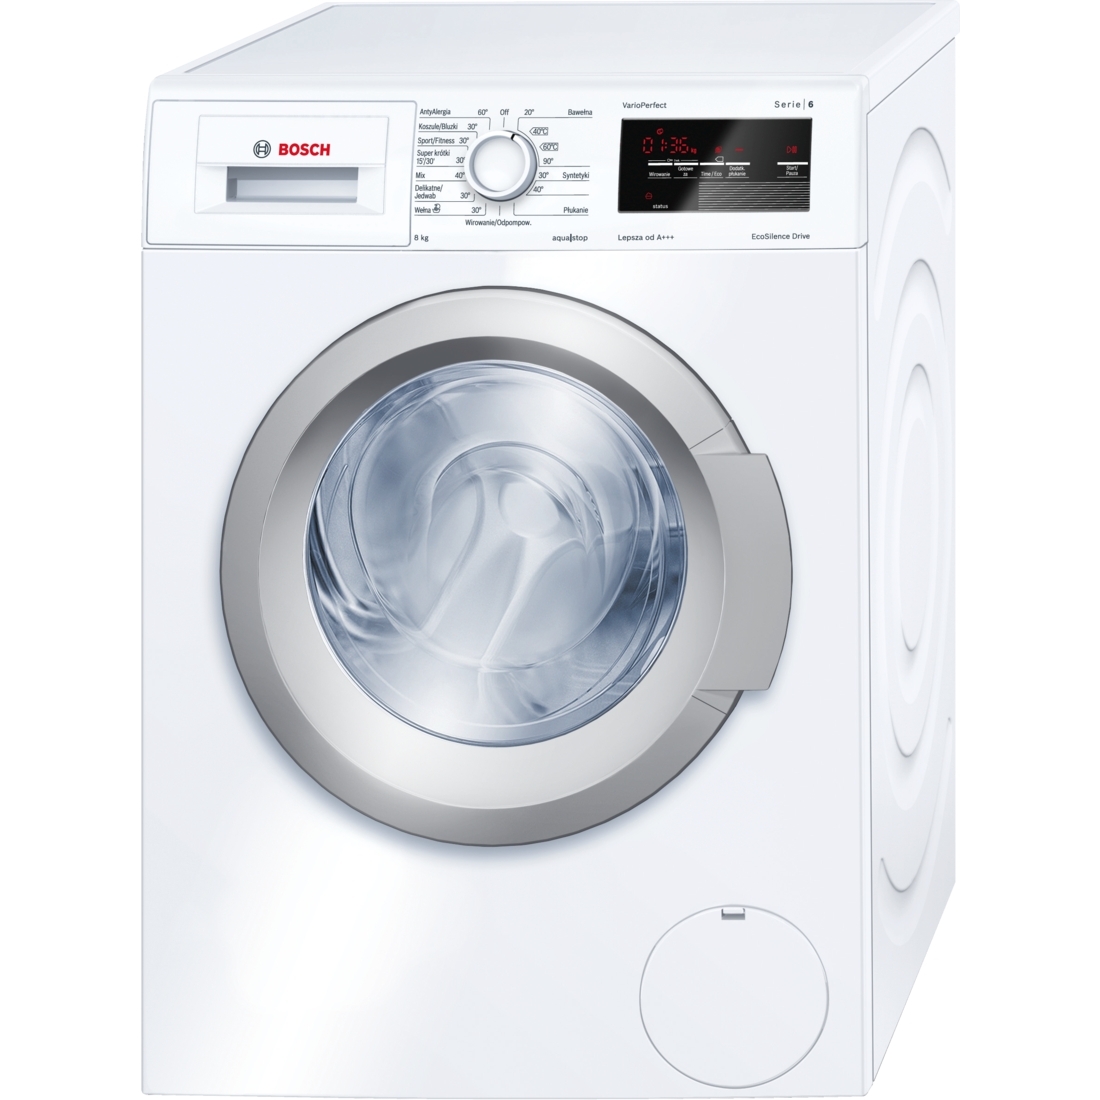 Máy giặt Bosch 8 kg WAT24340PL